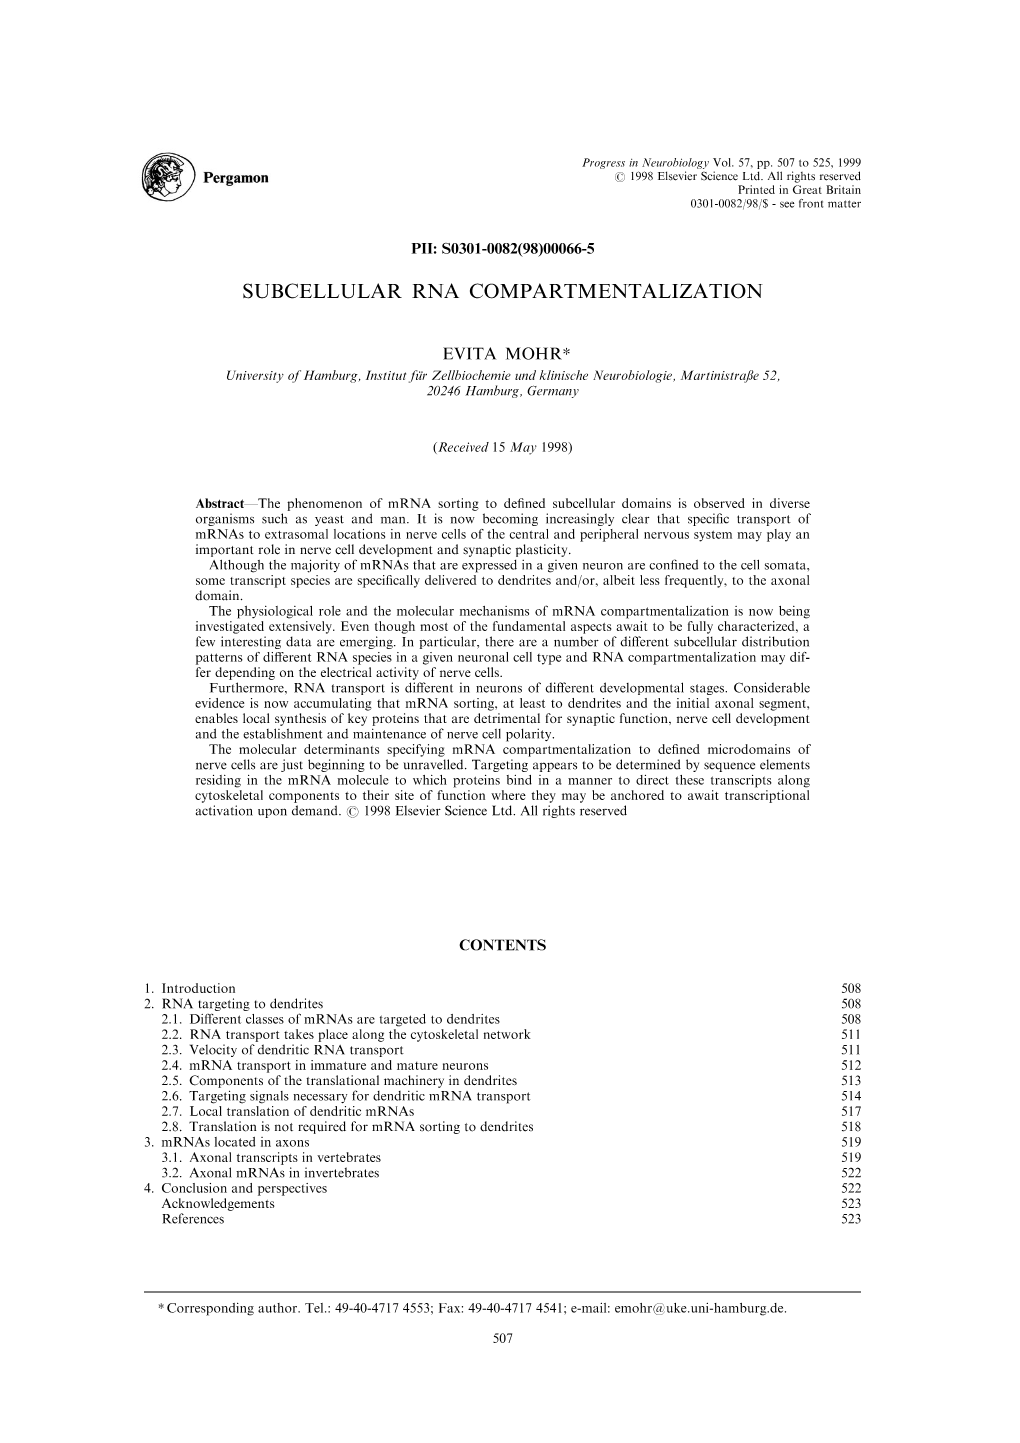 Subcellular Rna Compartmentalization